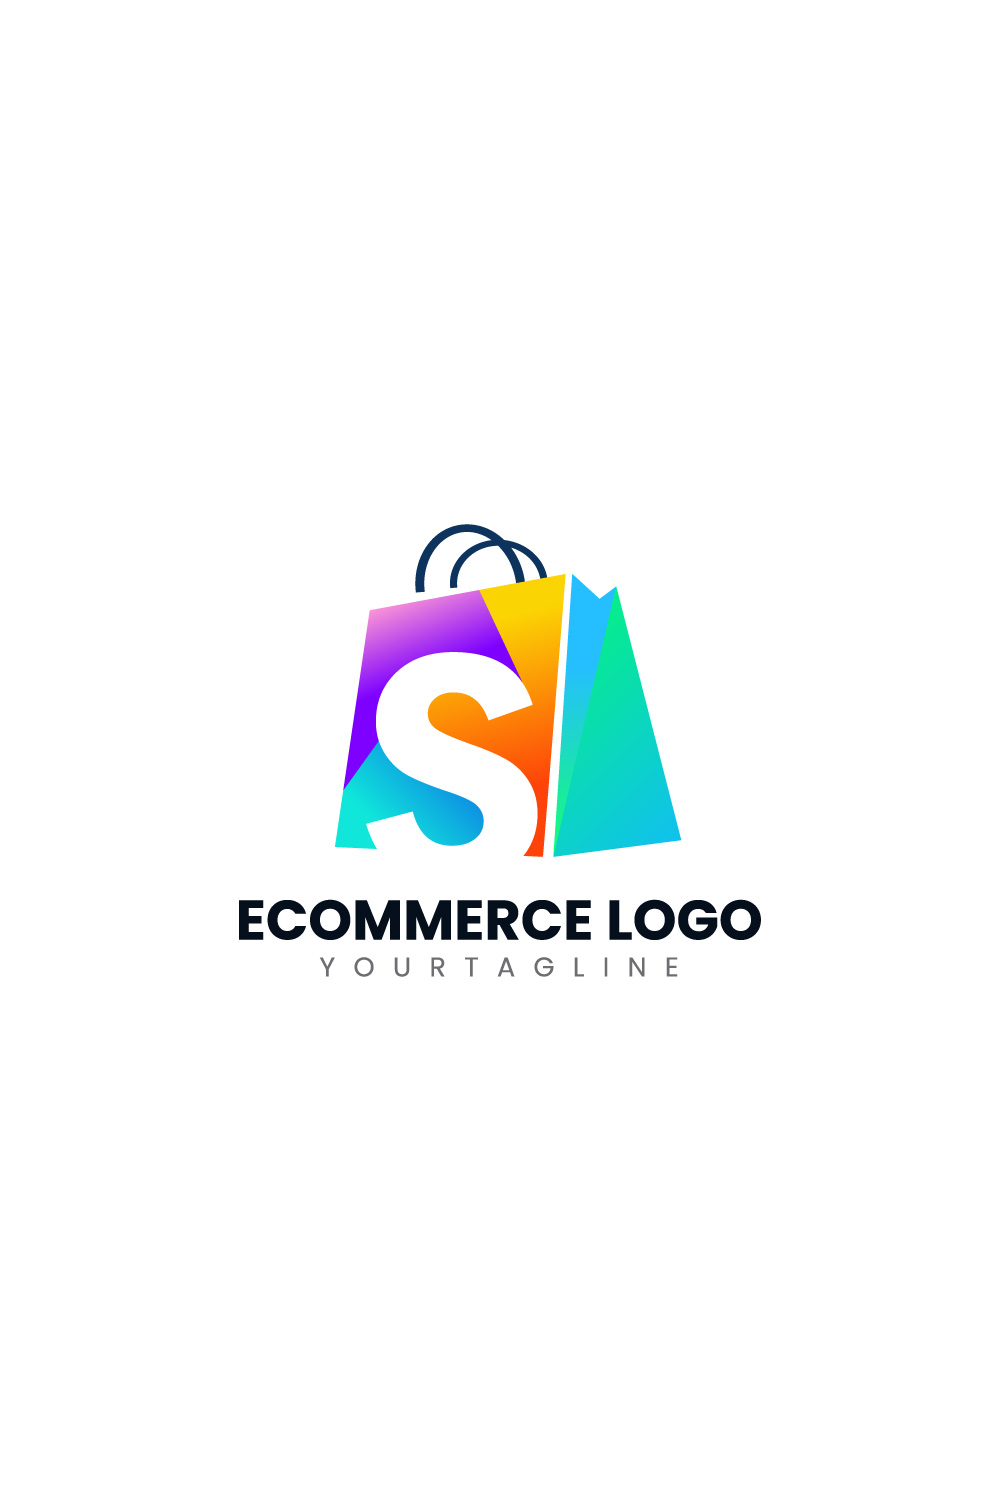 Ecommerce logo - Online Shopping - Shopify logo pinterest preview image.